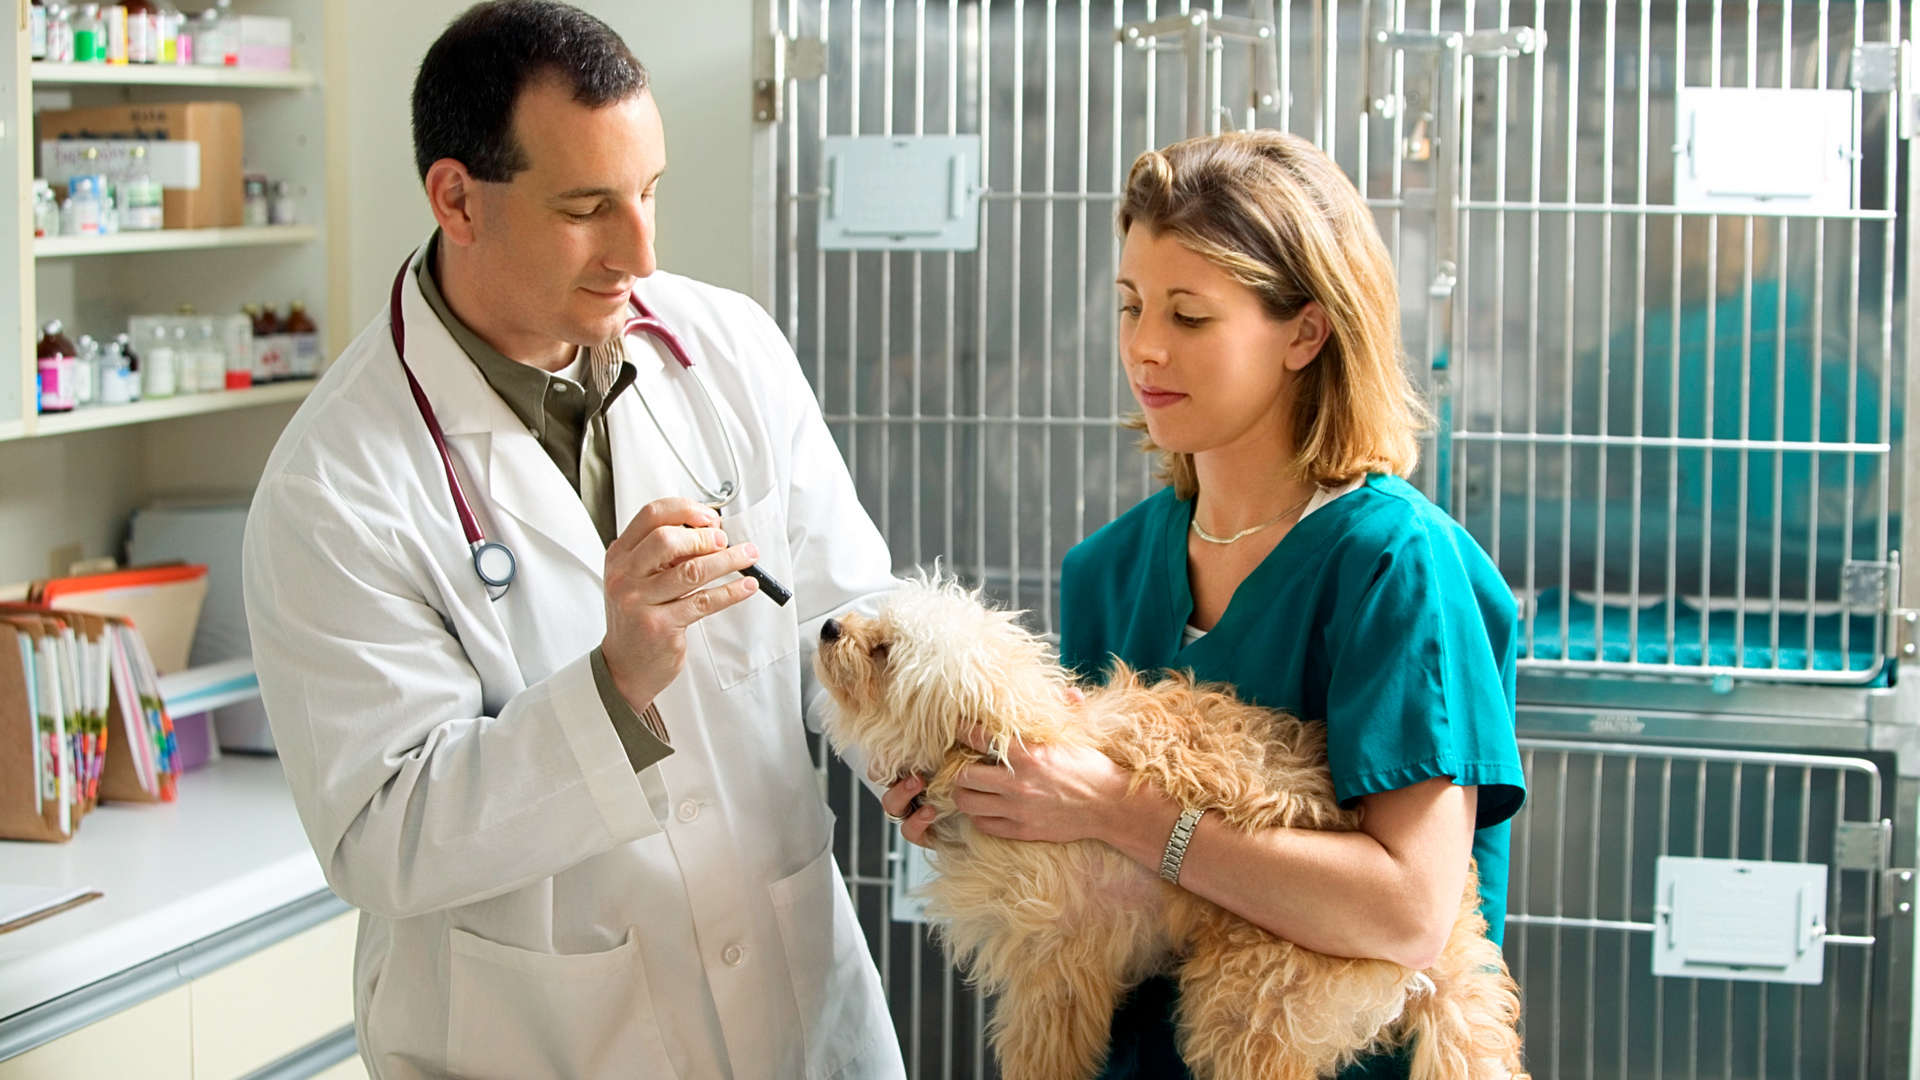 Vet and technician examining dog